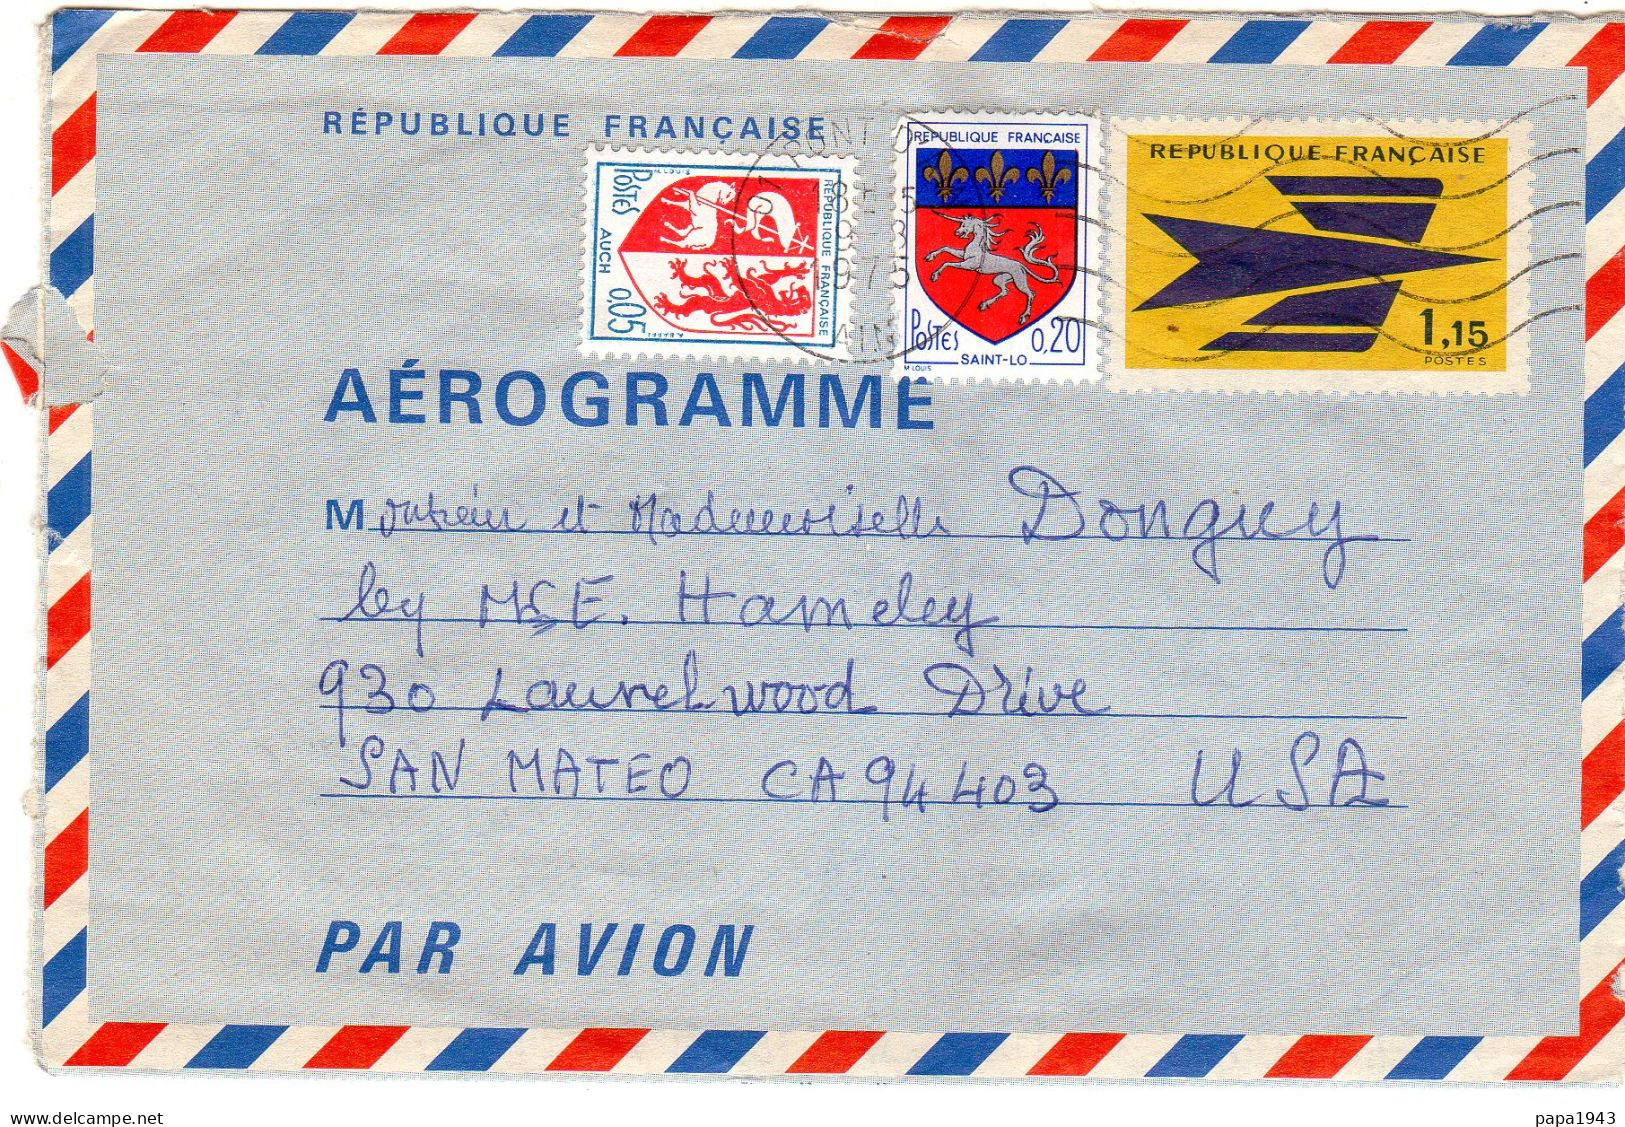 1975  AEROGRAMME  Timbres  Blasons Auch 0,05 + St LO 0,20 + 1,15 Envoyée à SAN MATEO U S A - Aerogramas